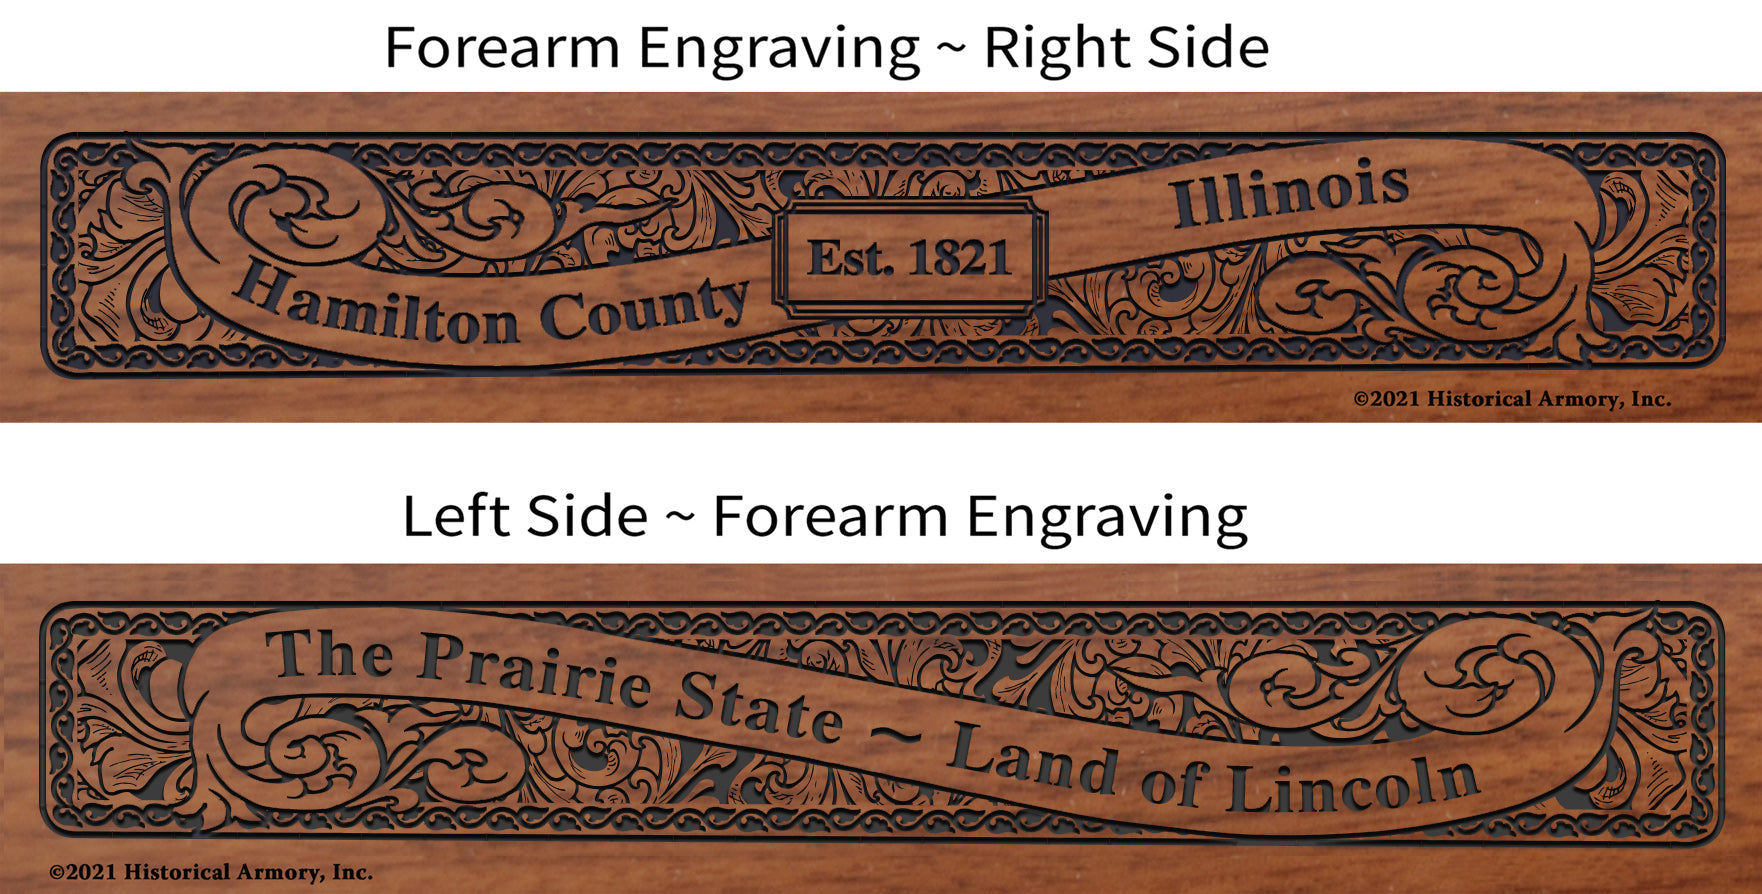 Hamilton County Illinois Establishment and Motto History Engraved Rifle Forearm